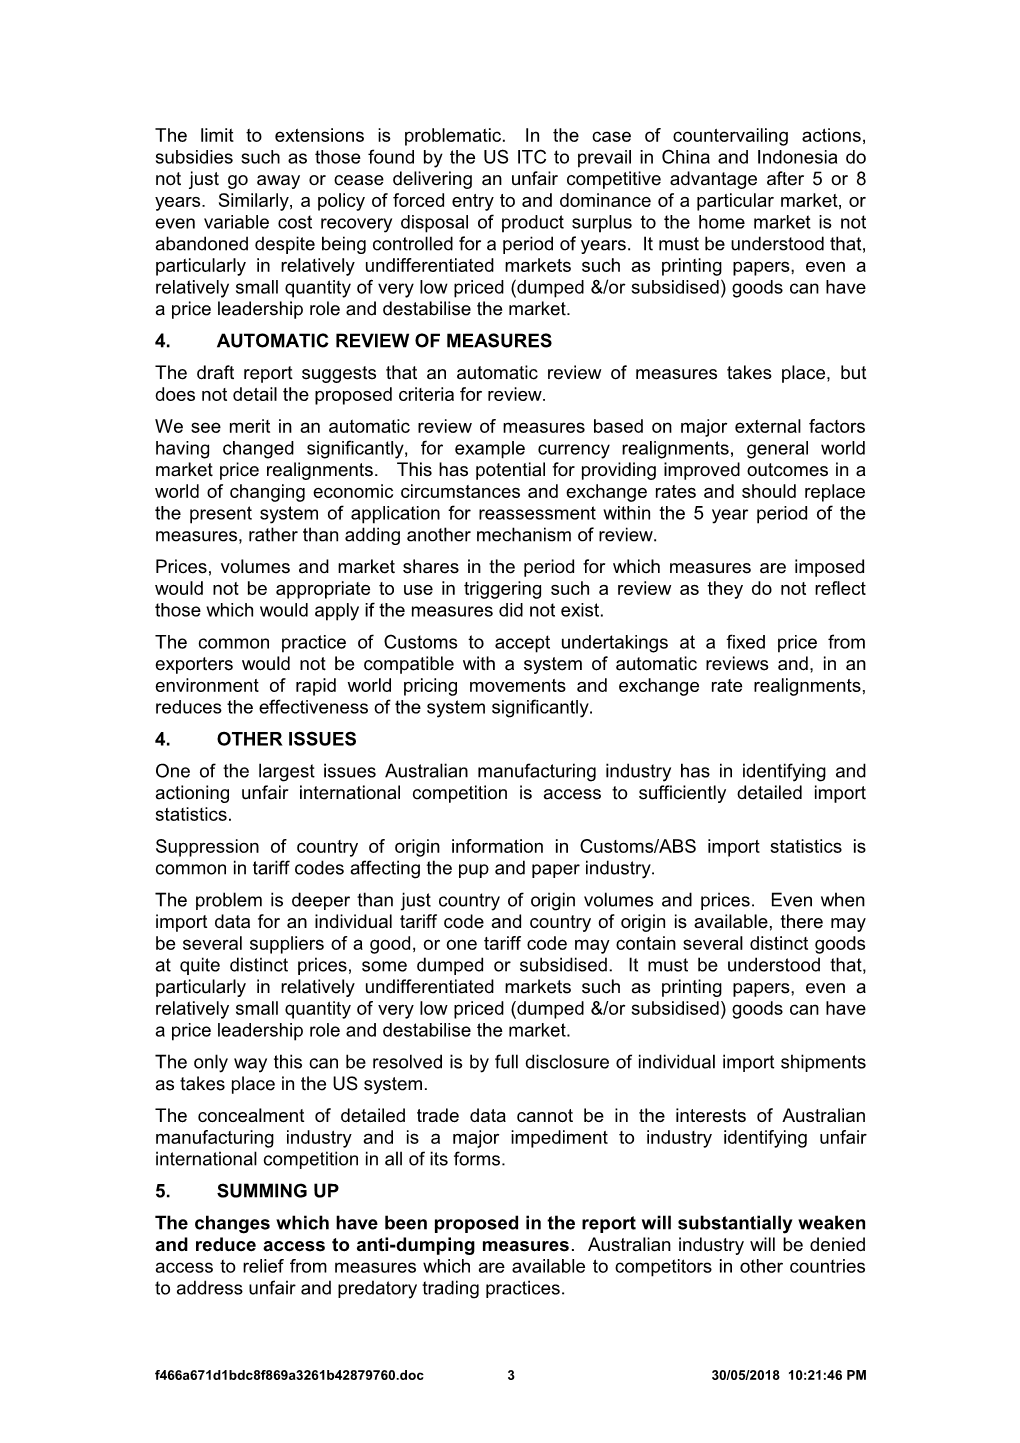 Comment 7 - Australian Paper - Attachment 2: Cooments on Pc Report 48 on Australia's